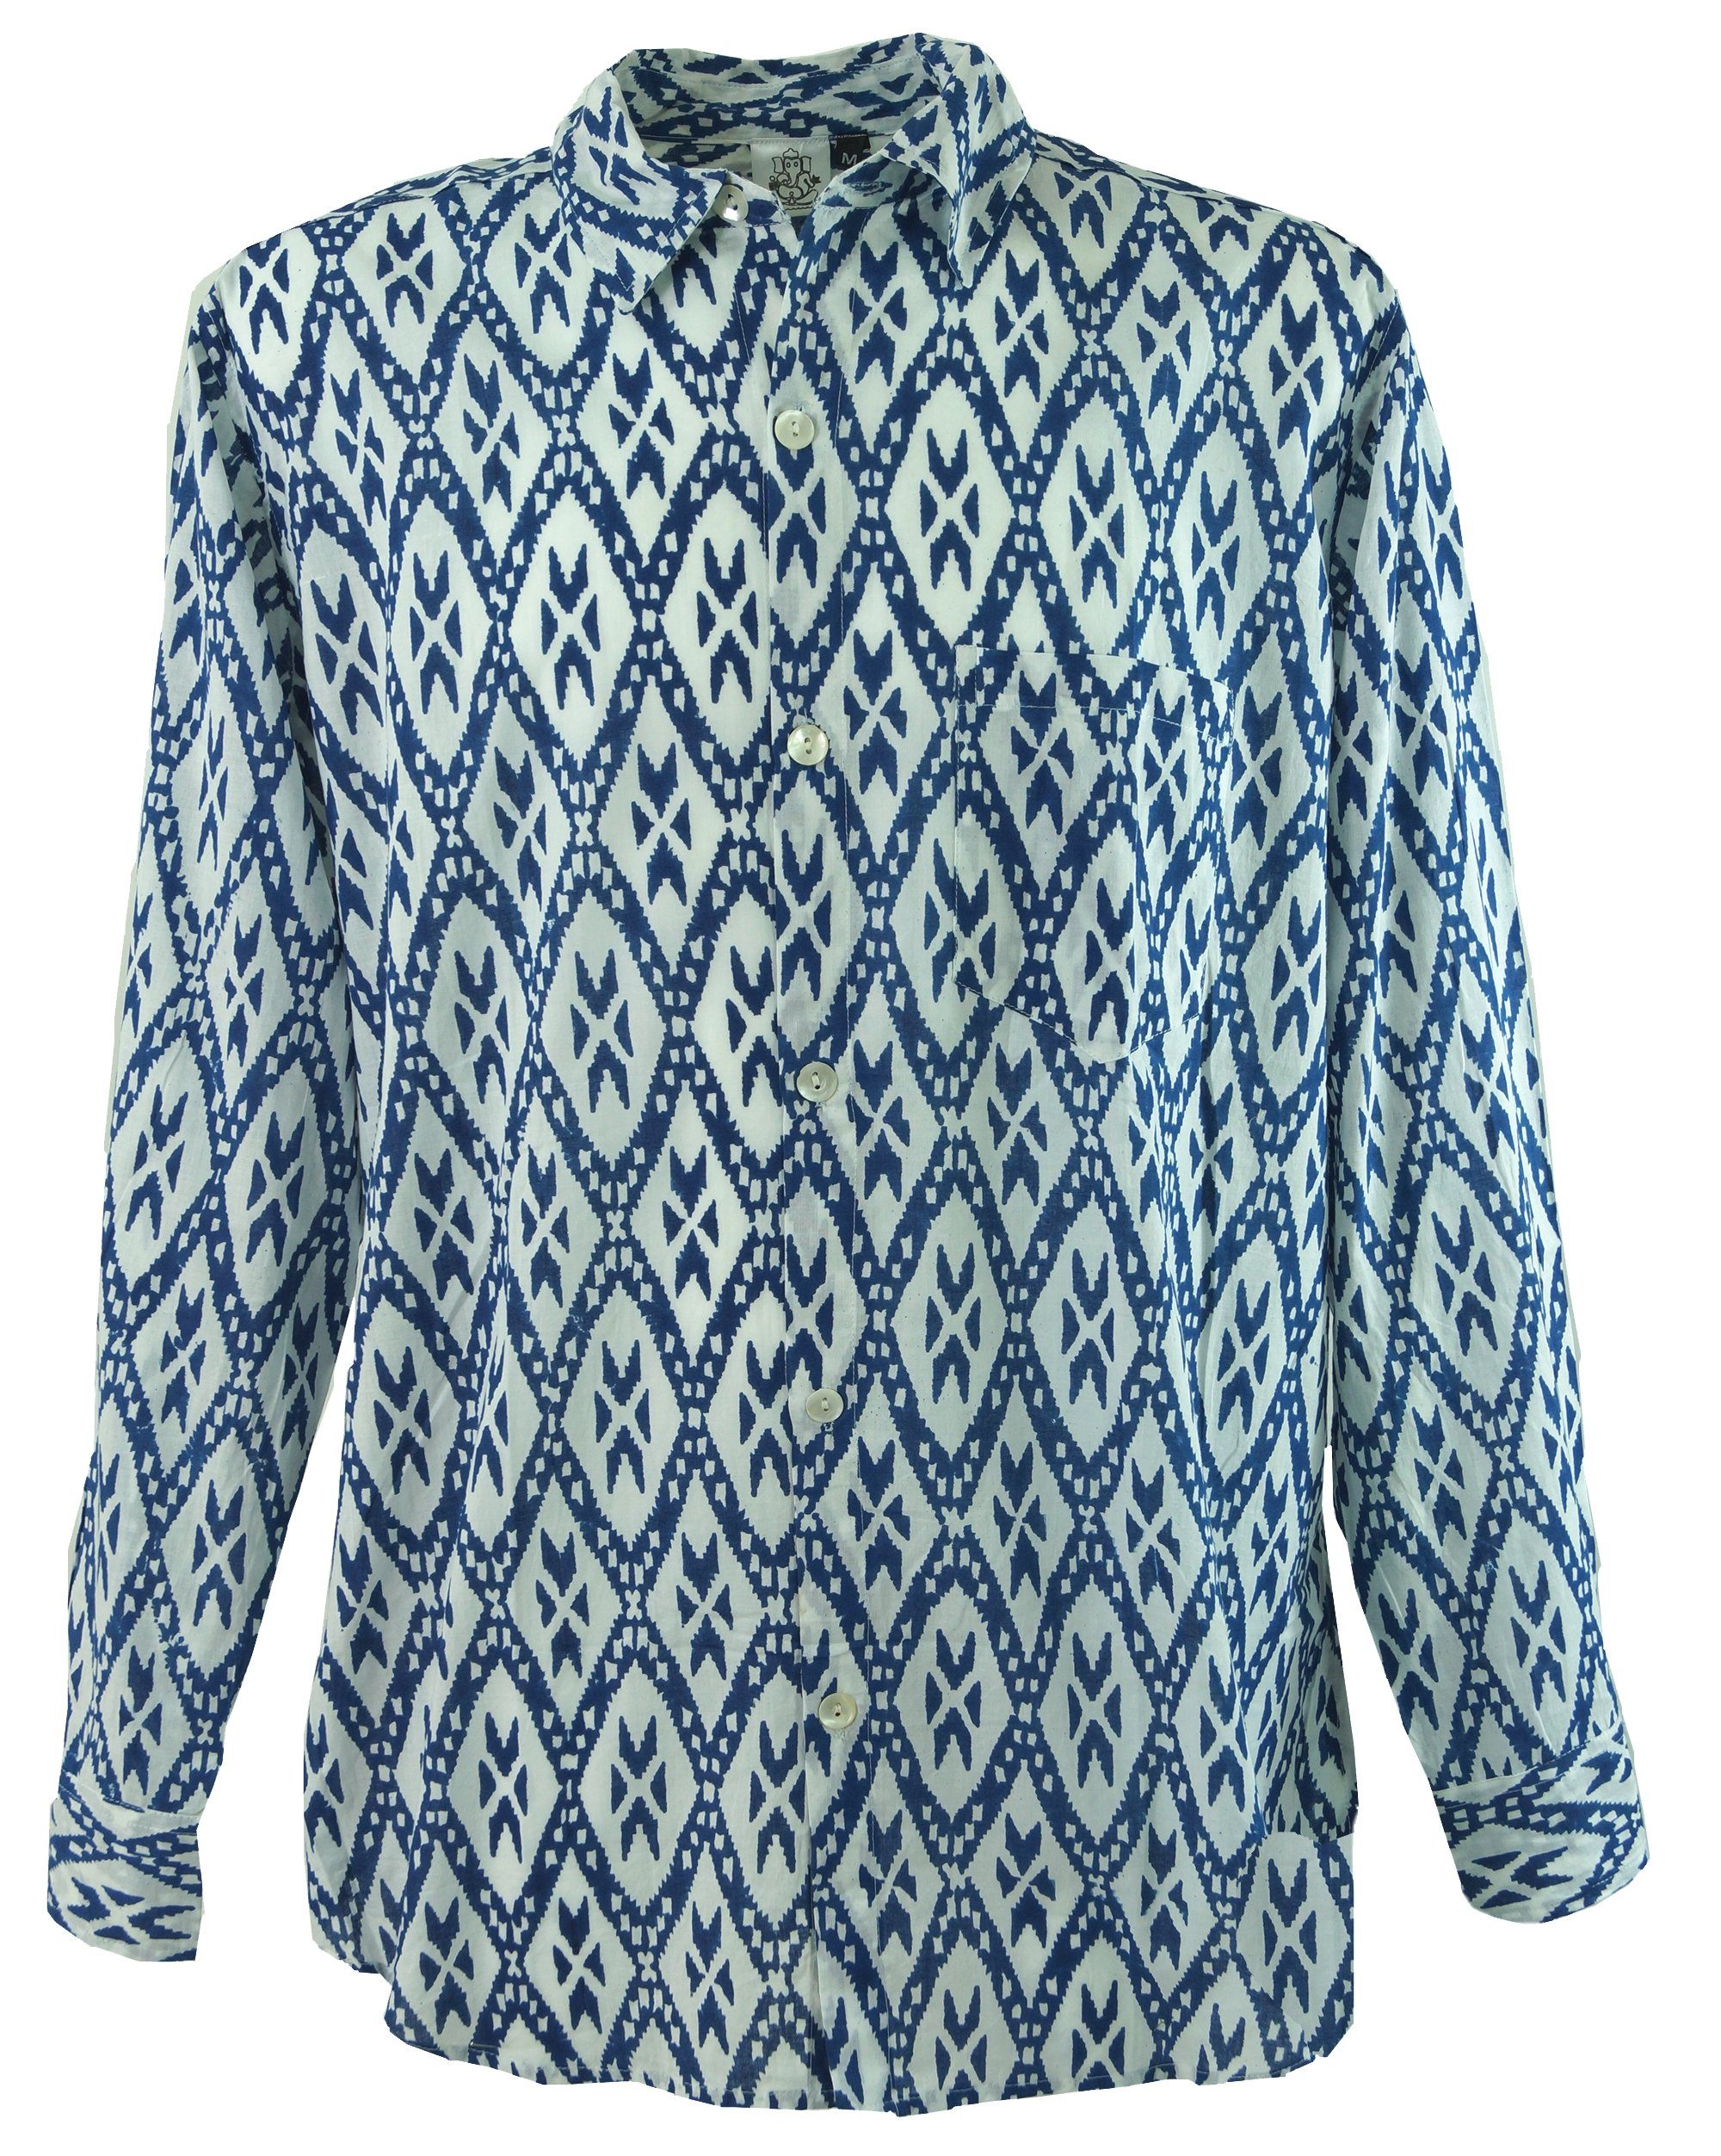 Guru-Shop Hemd & Shirt Goa Hippie Hemd, Herrenhemd - blau Ethno Style, alternative Bekleidung, Retro